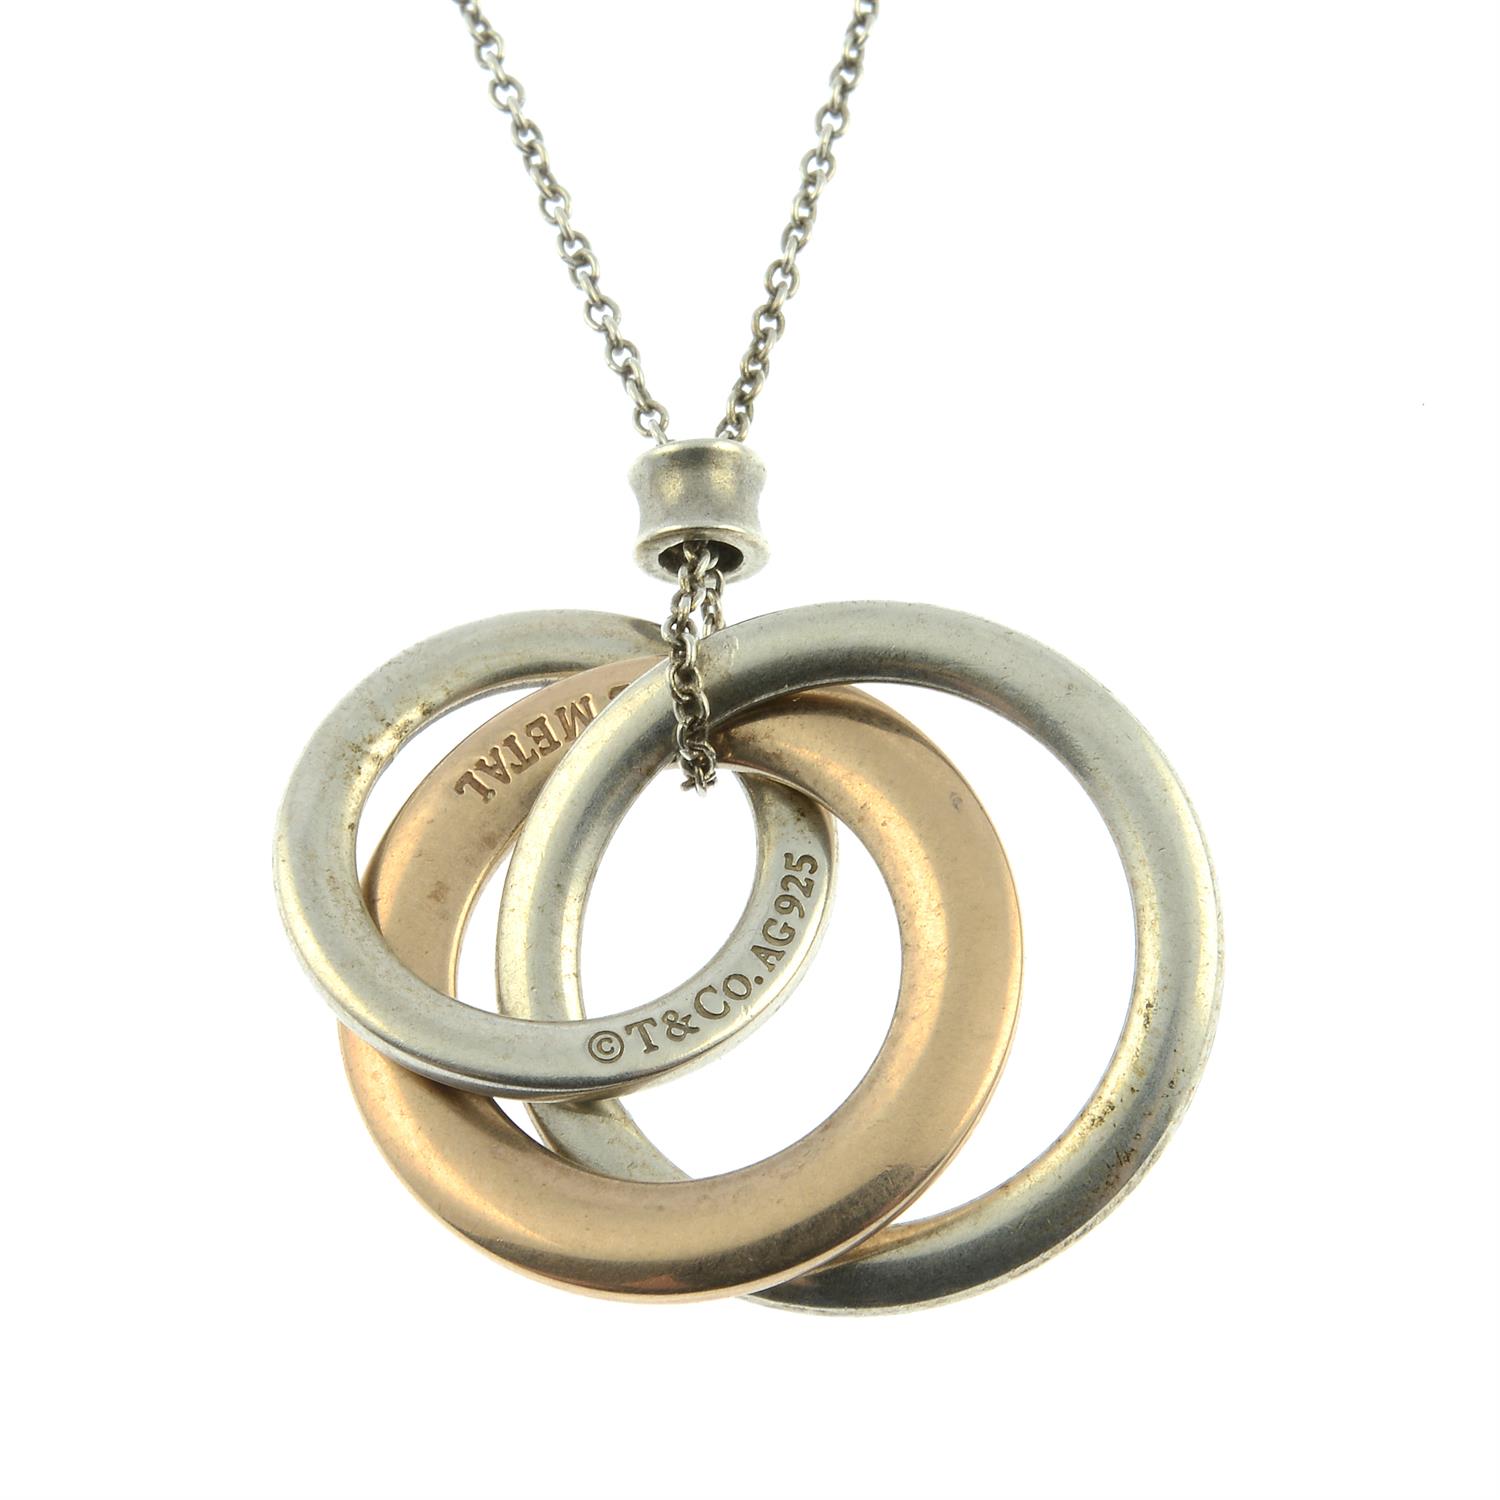 An interlocking three circle 'Tiffany 1837' pendant, with integral chain, by Tiffany & Co.